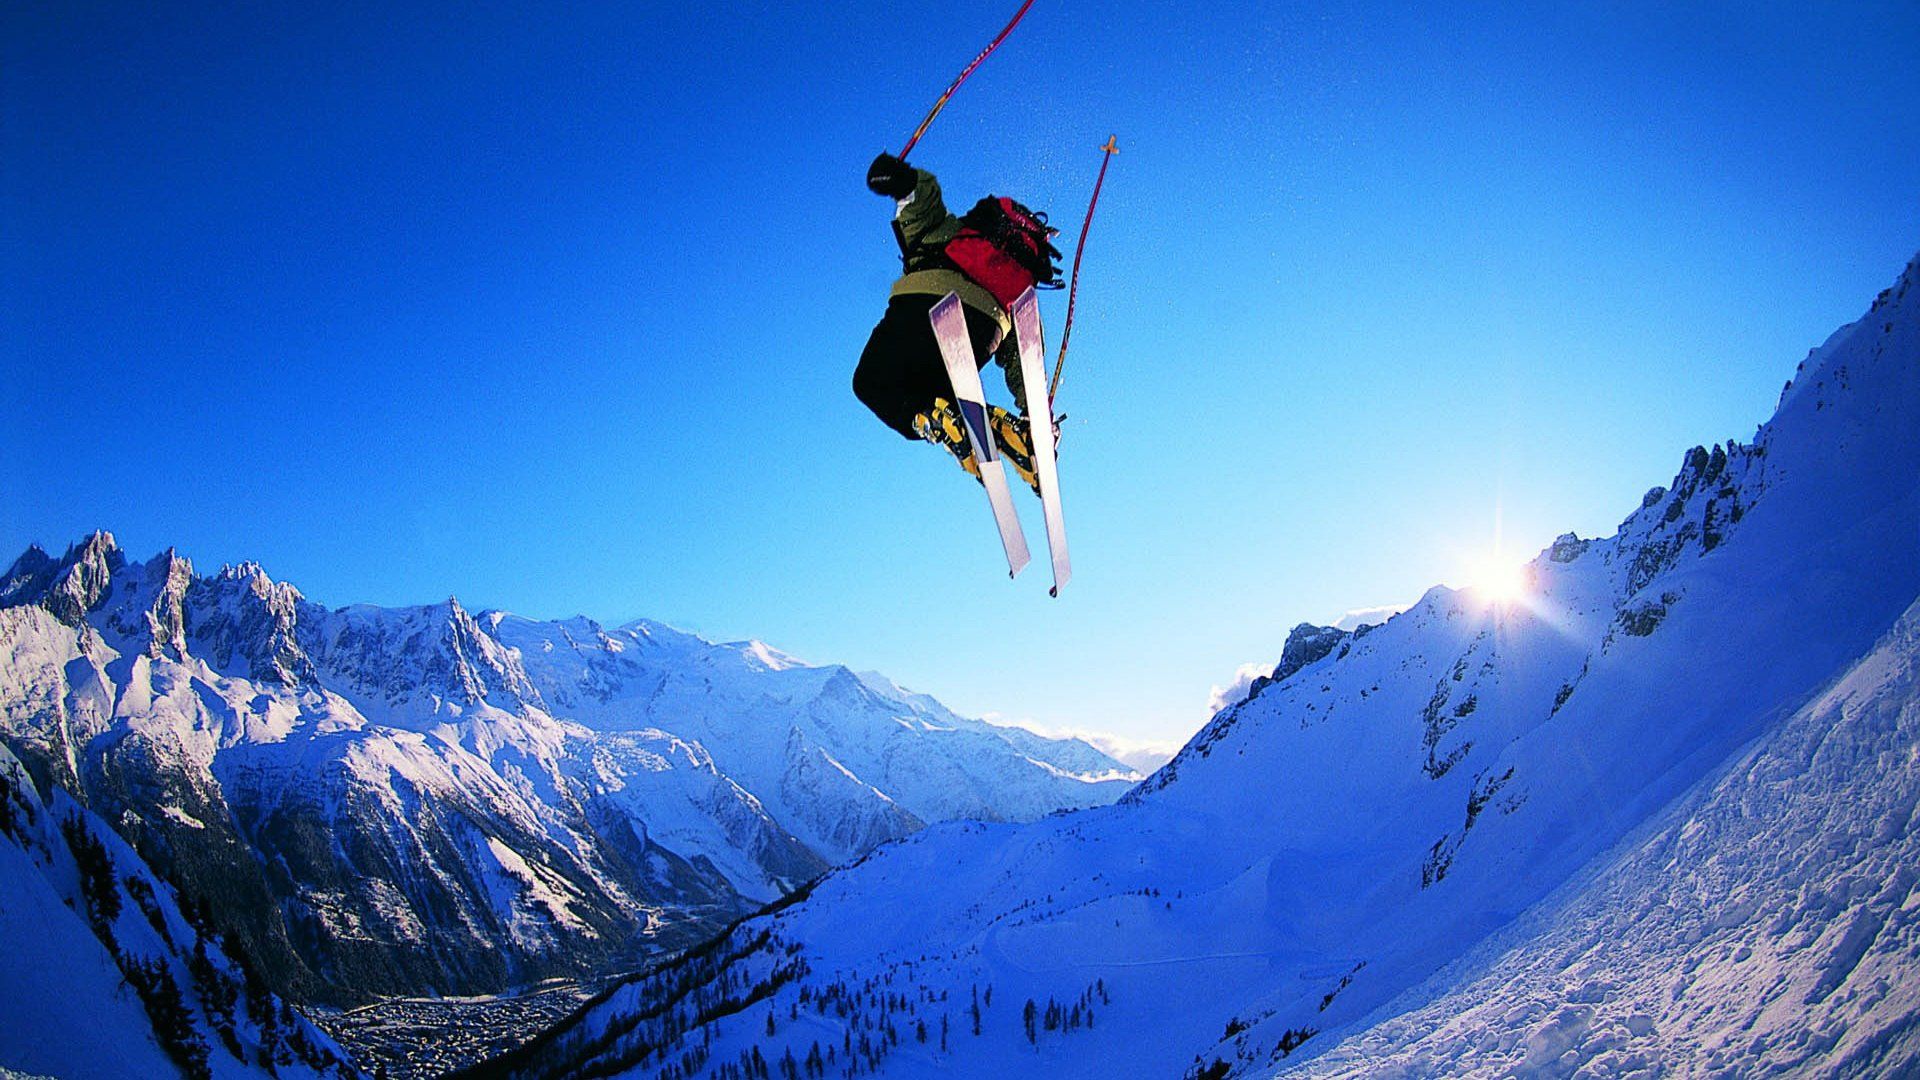 HD Snowboarding Mountain Wallpaper High Resolution Sports